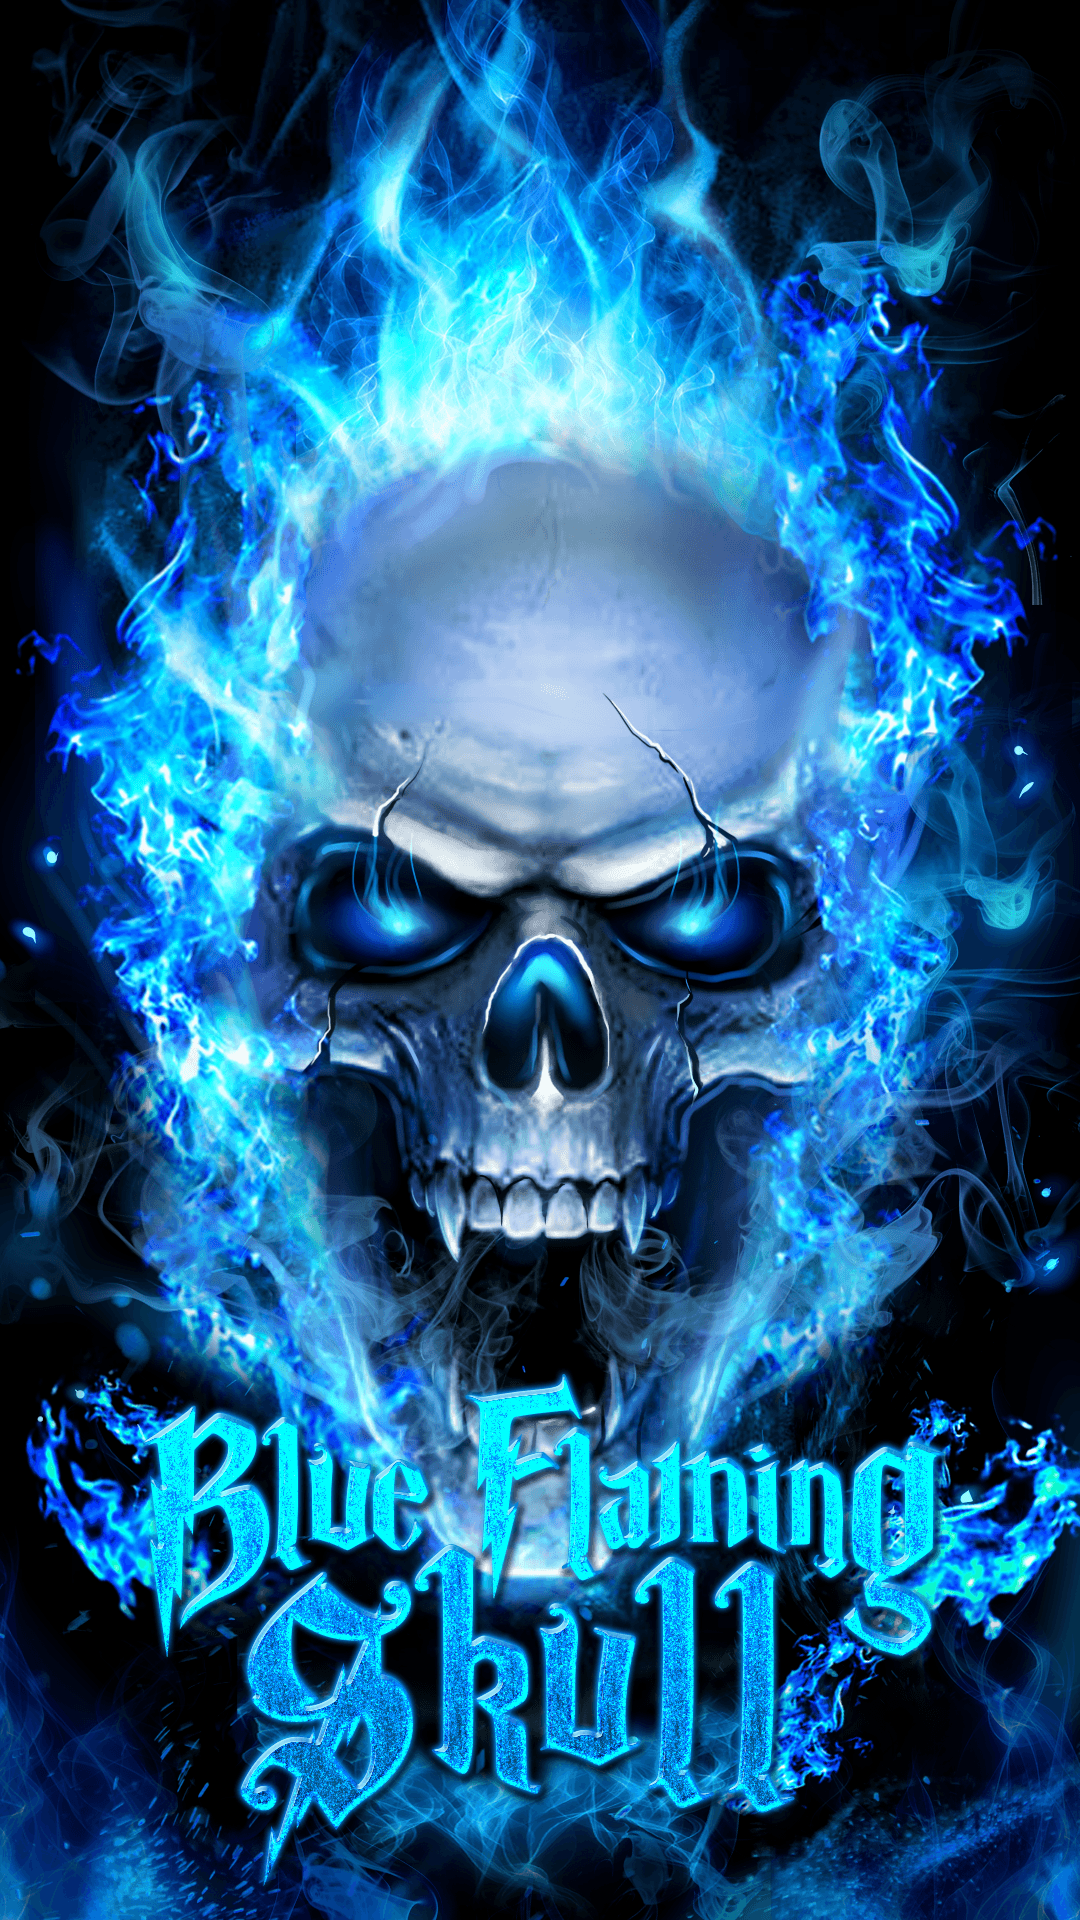 Blue flaming skull live wallpaper!. Skull wallpaper, Skull picture, Skull artwork